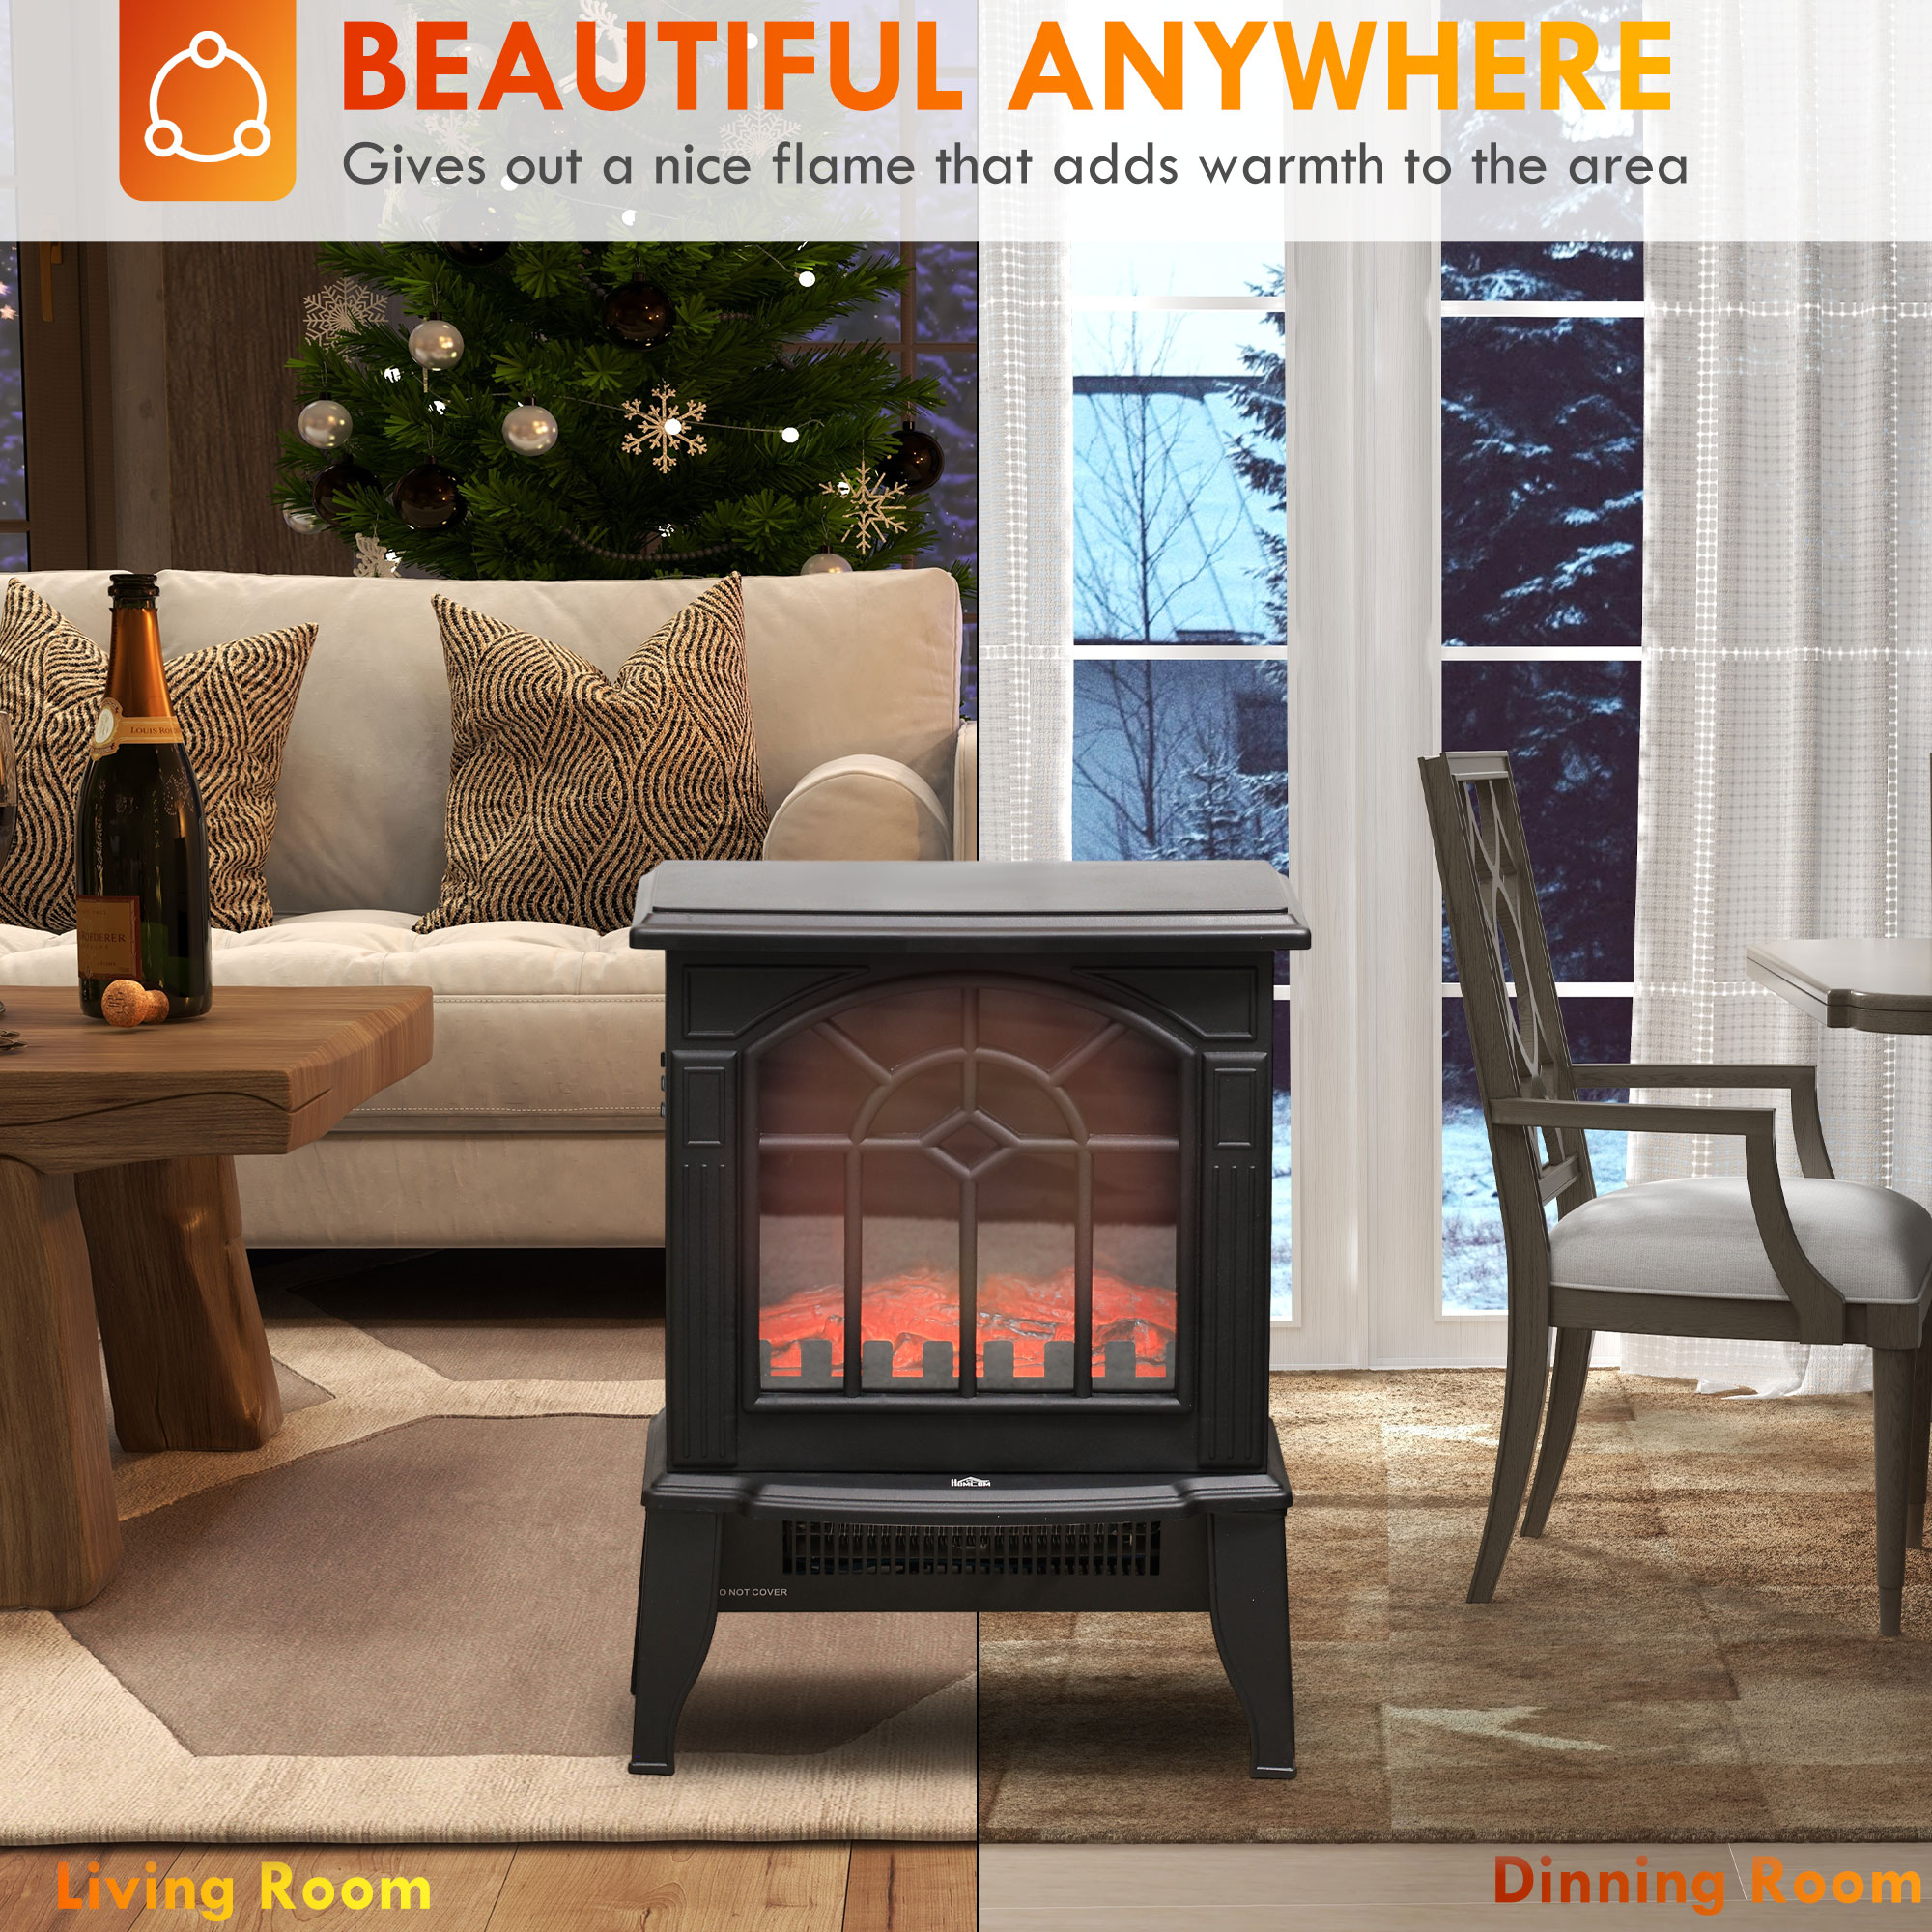 HomCom 16 in x 14.5 in 1500W Freestanding Indoor Electric Fireplace Heater, 9.3 lb - image 3 of 9